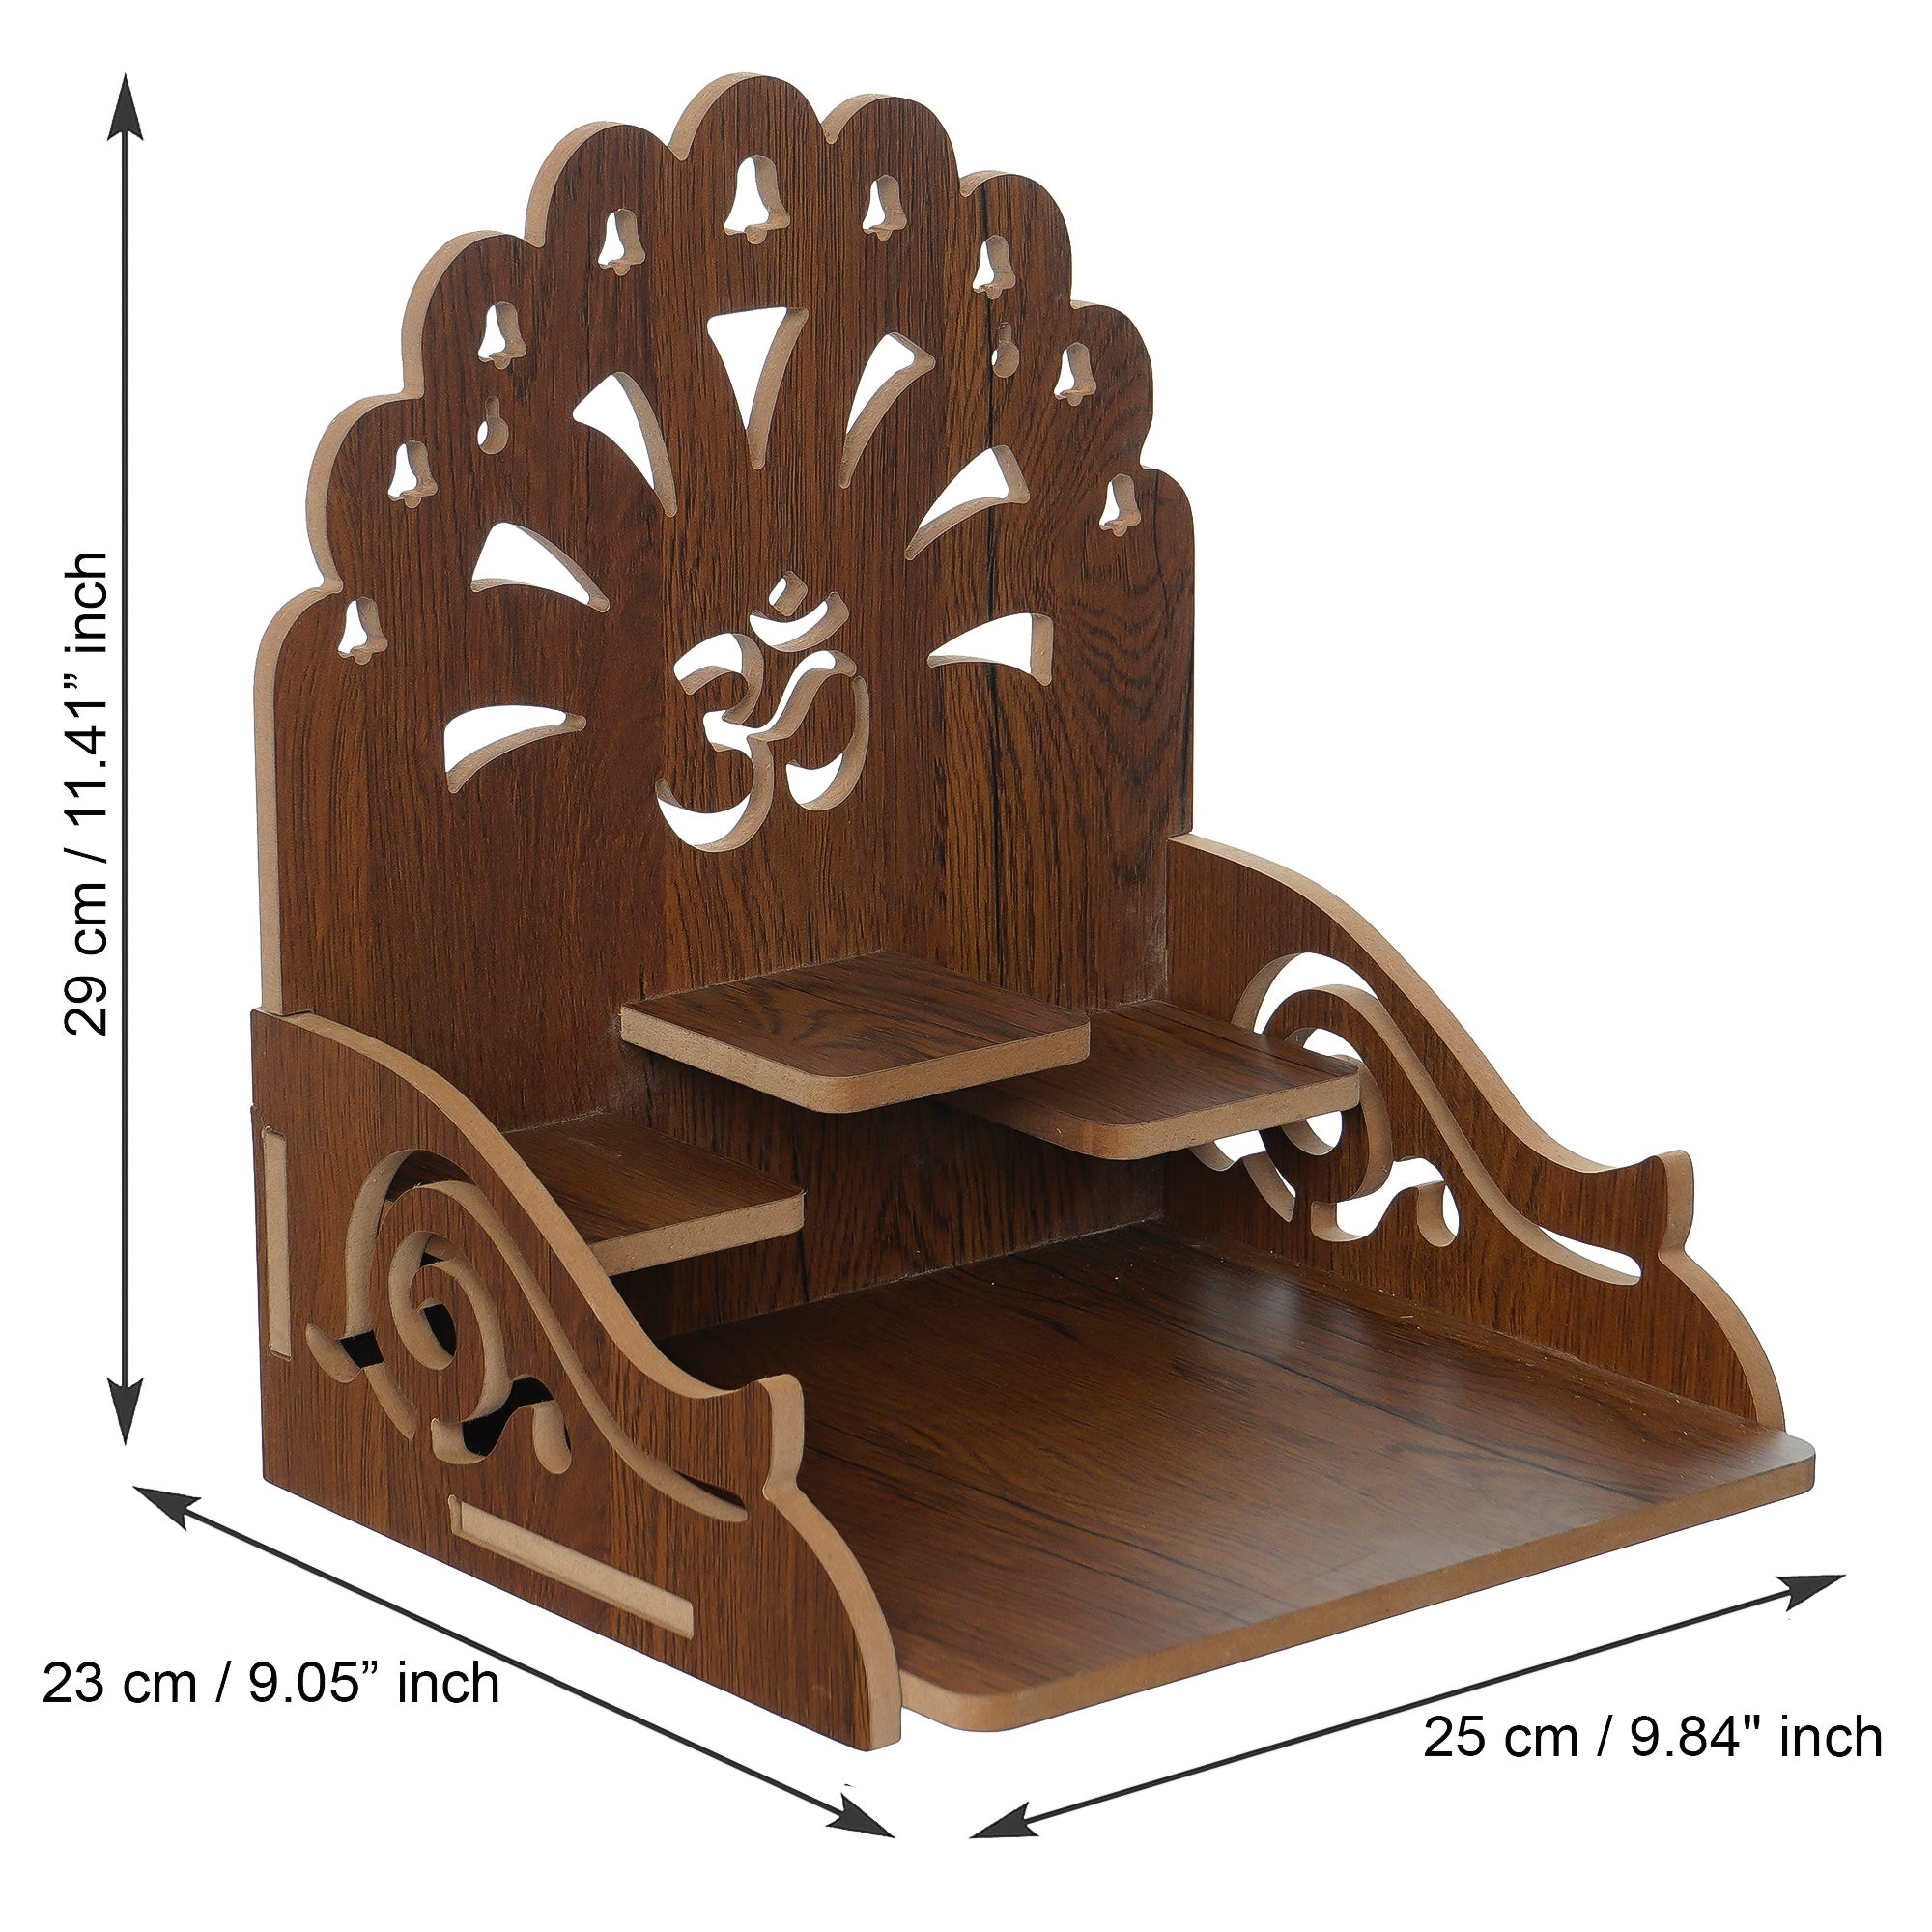 Om with Bells Design and 3 Shelfs Laminated Wood Pooja Temple/Mandir 3